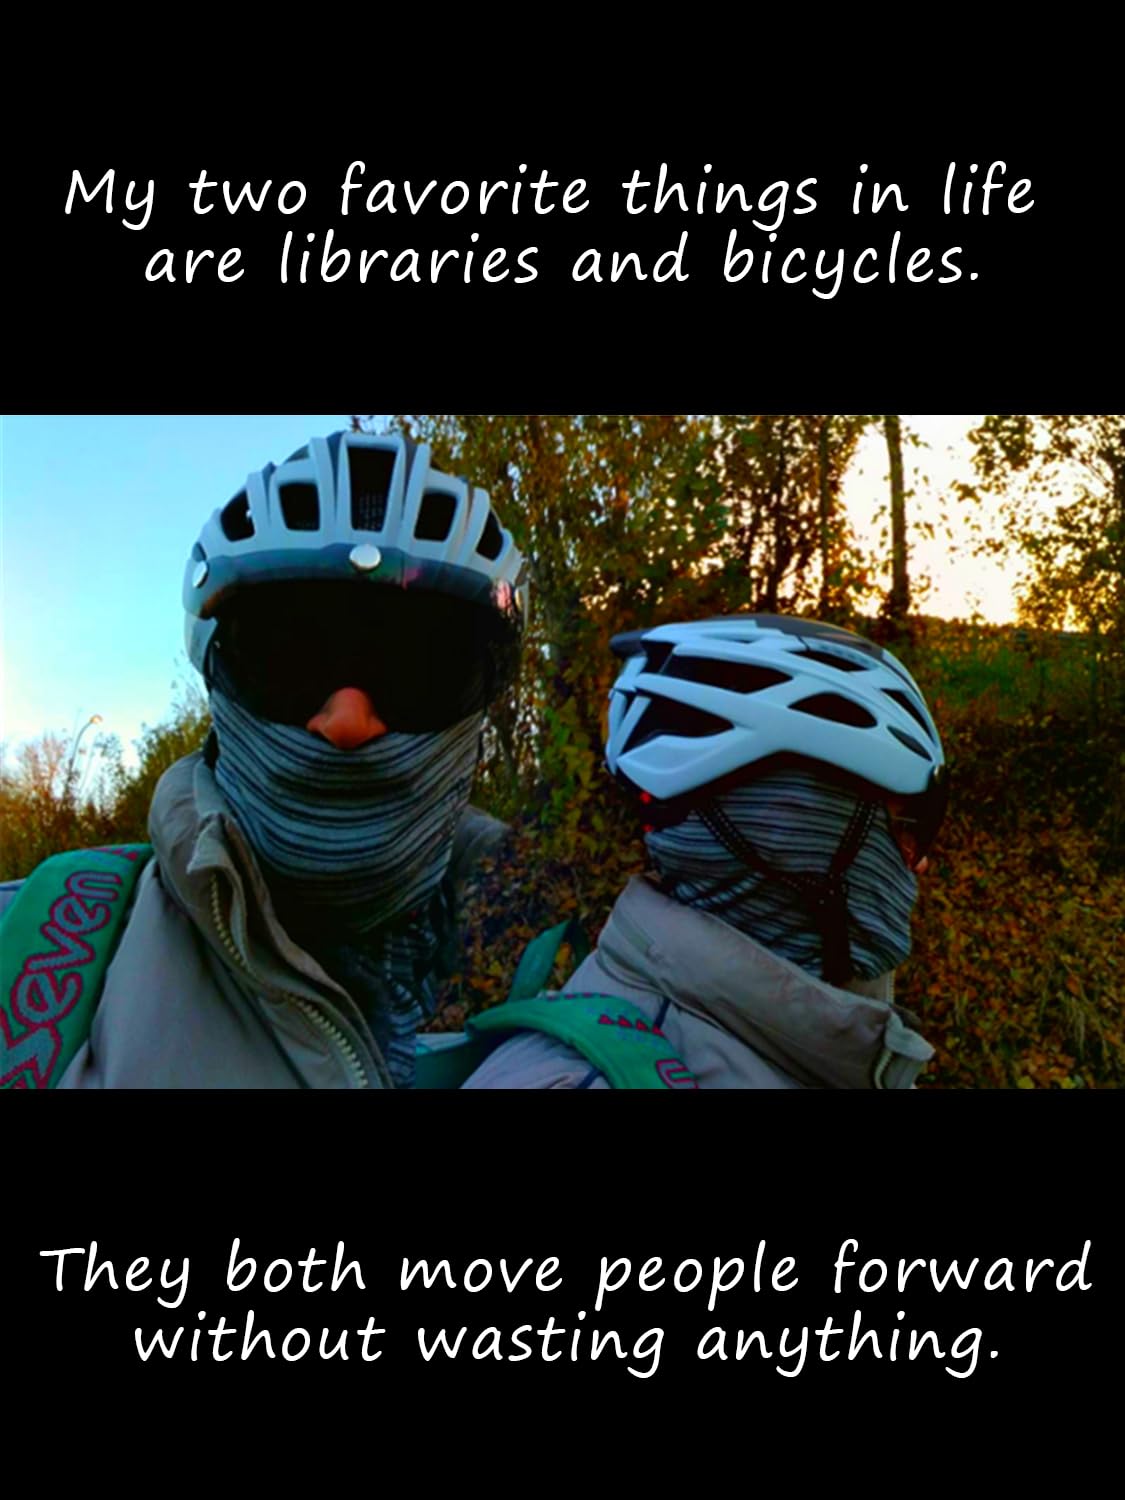 Shinmax 自転車 ヘルメット 大人 LEDライト 磁気ゴーグル付 ロードバイク ヘルメット CPSC認定済み 57~62cm 超軽量 通勤 通学 サイクリング サイクルヘルメット 男性 女性 中学生 高校生 収納袋 予備バッテリー付 M/L